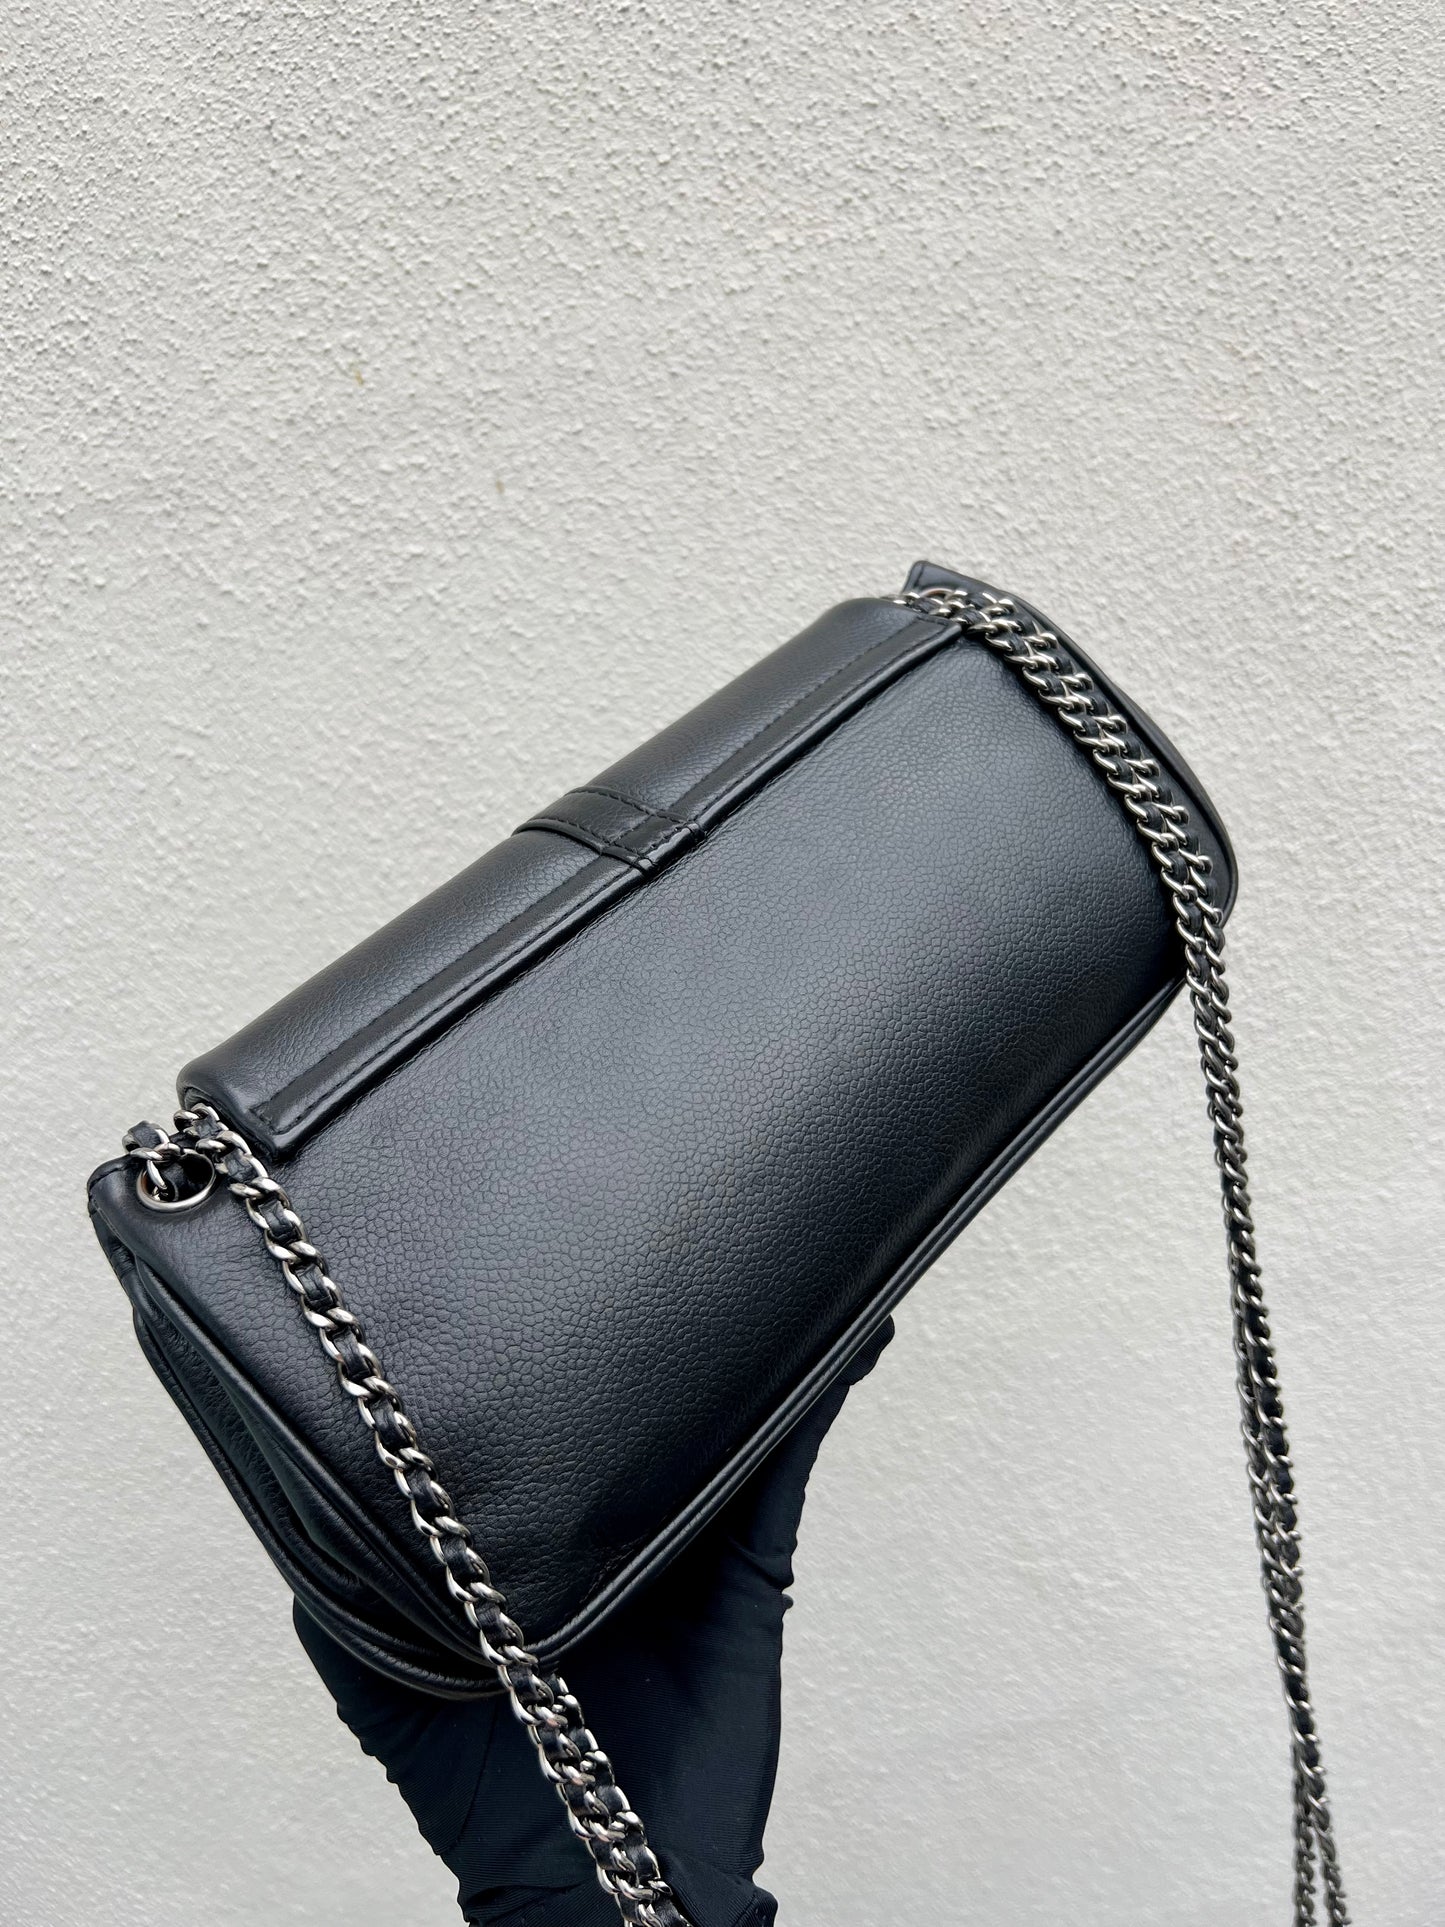 Pre-loved Chanel 2.55 Black Caviar Leather Shoulder & Crossbody Bag